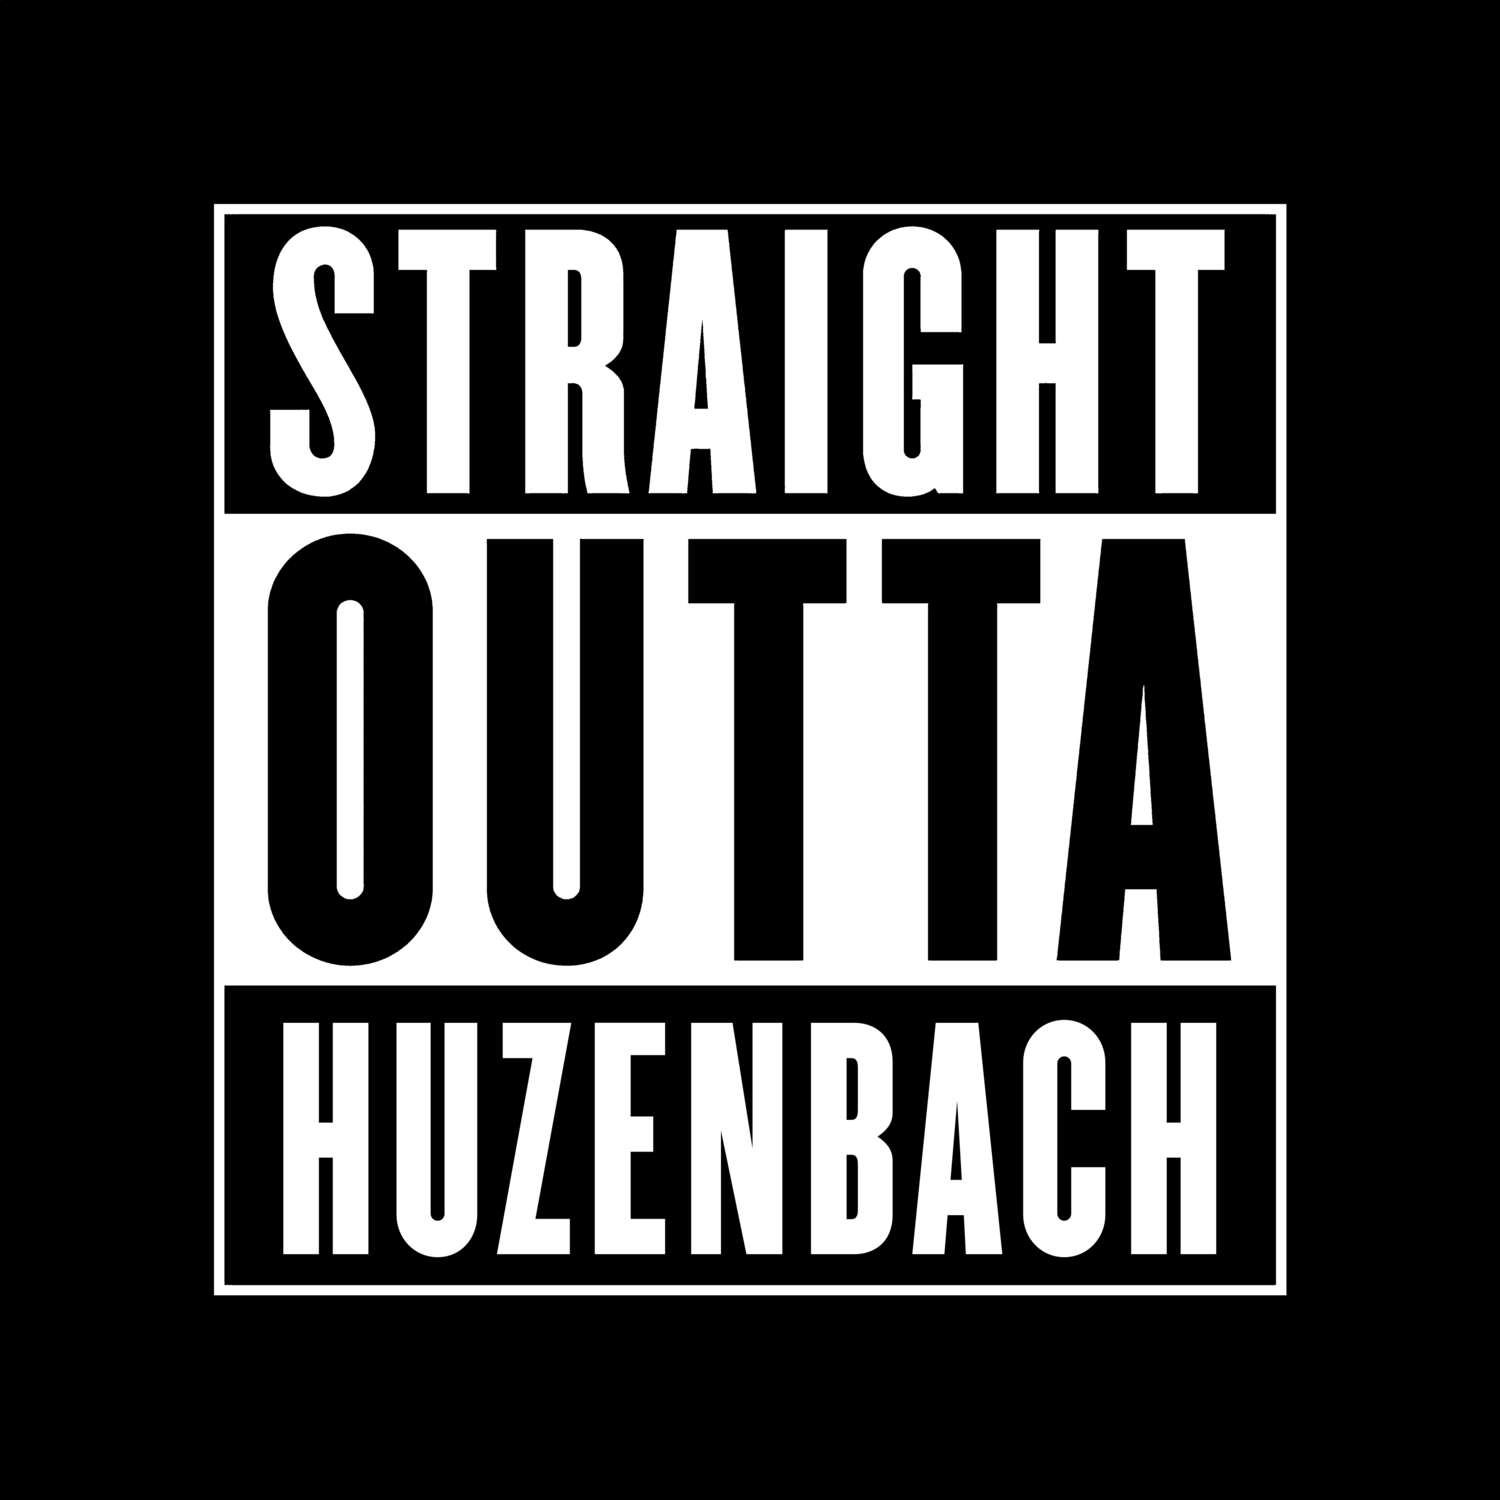 Huzenbach T-Shirt »Straight Outta«